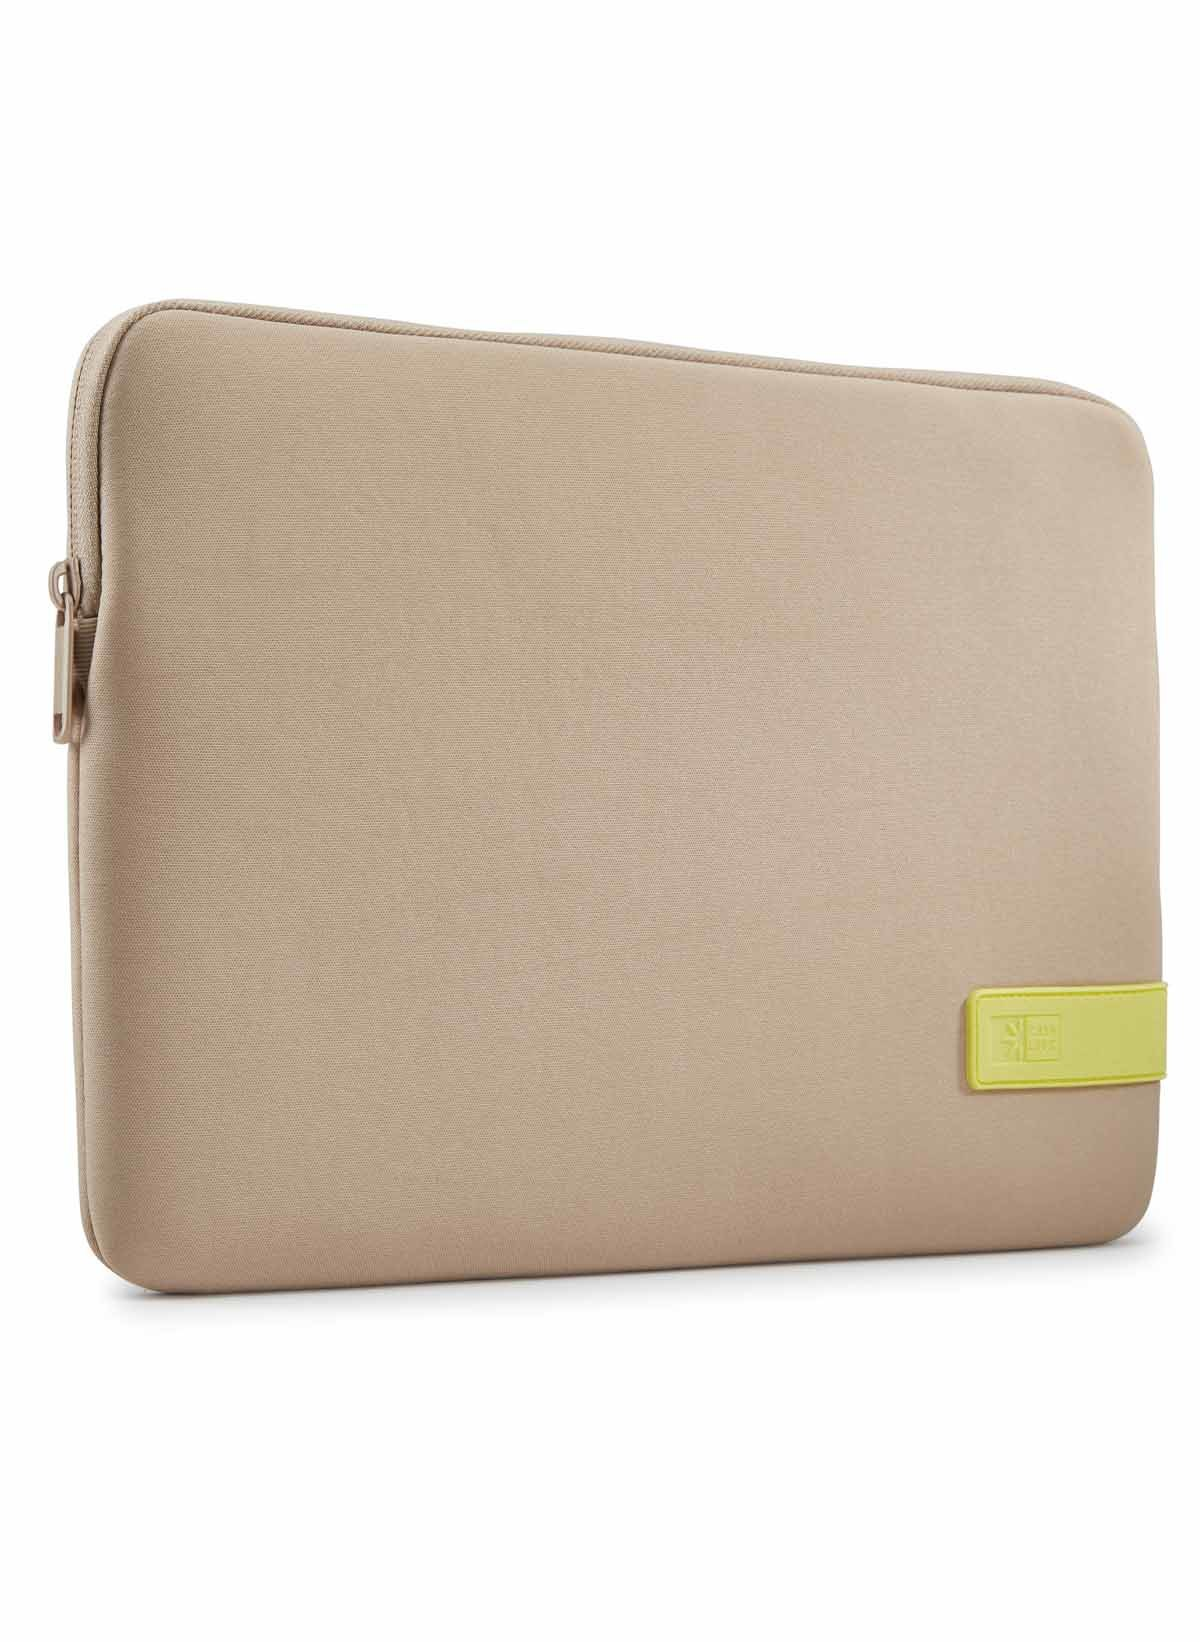 CASE LOGIC Notebook Universal Taupe Rucksack Reflect Sleeve für Polyester